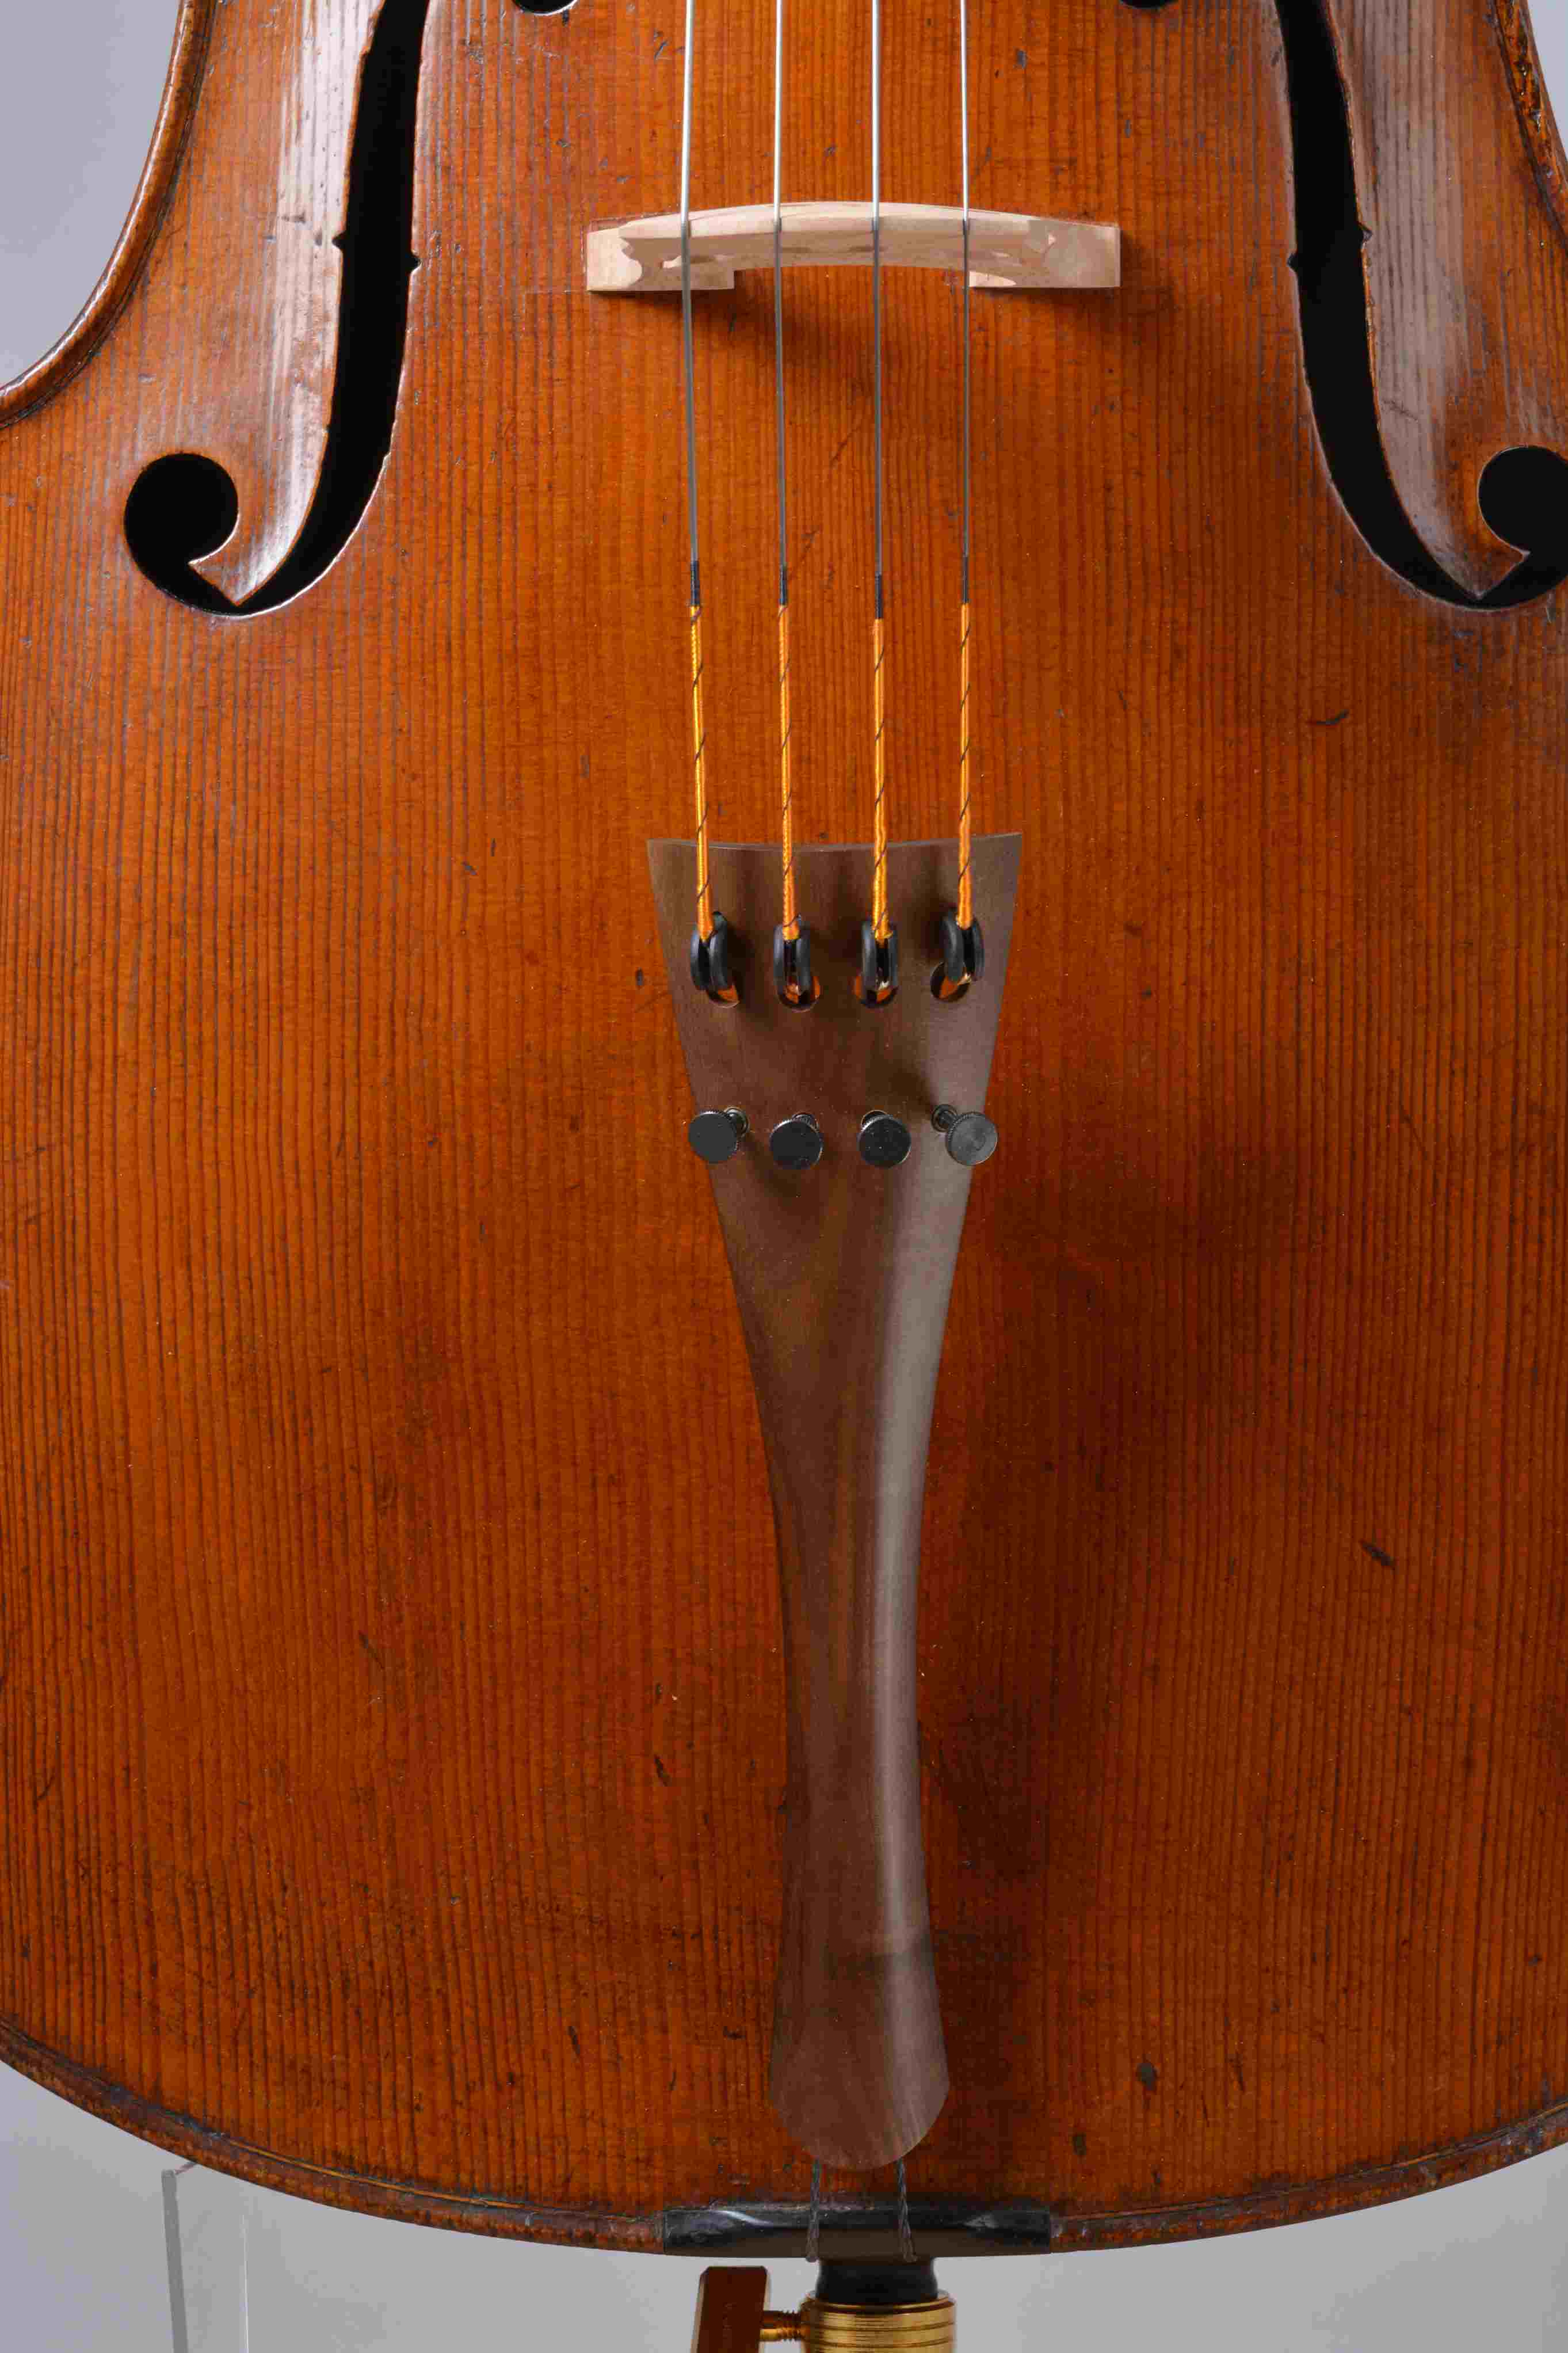 Cello tailpiece from Sonowood maple made by Wilhelm Geigenbau